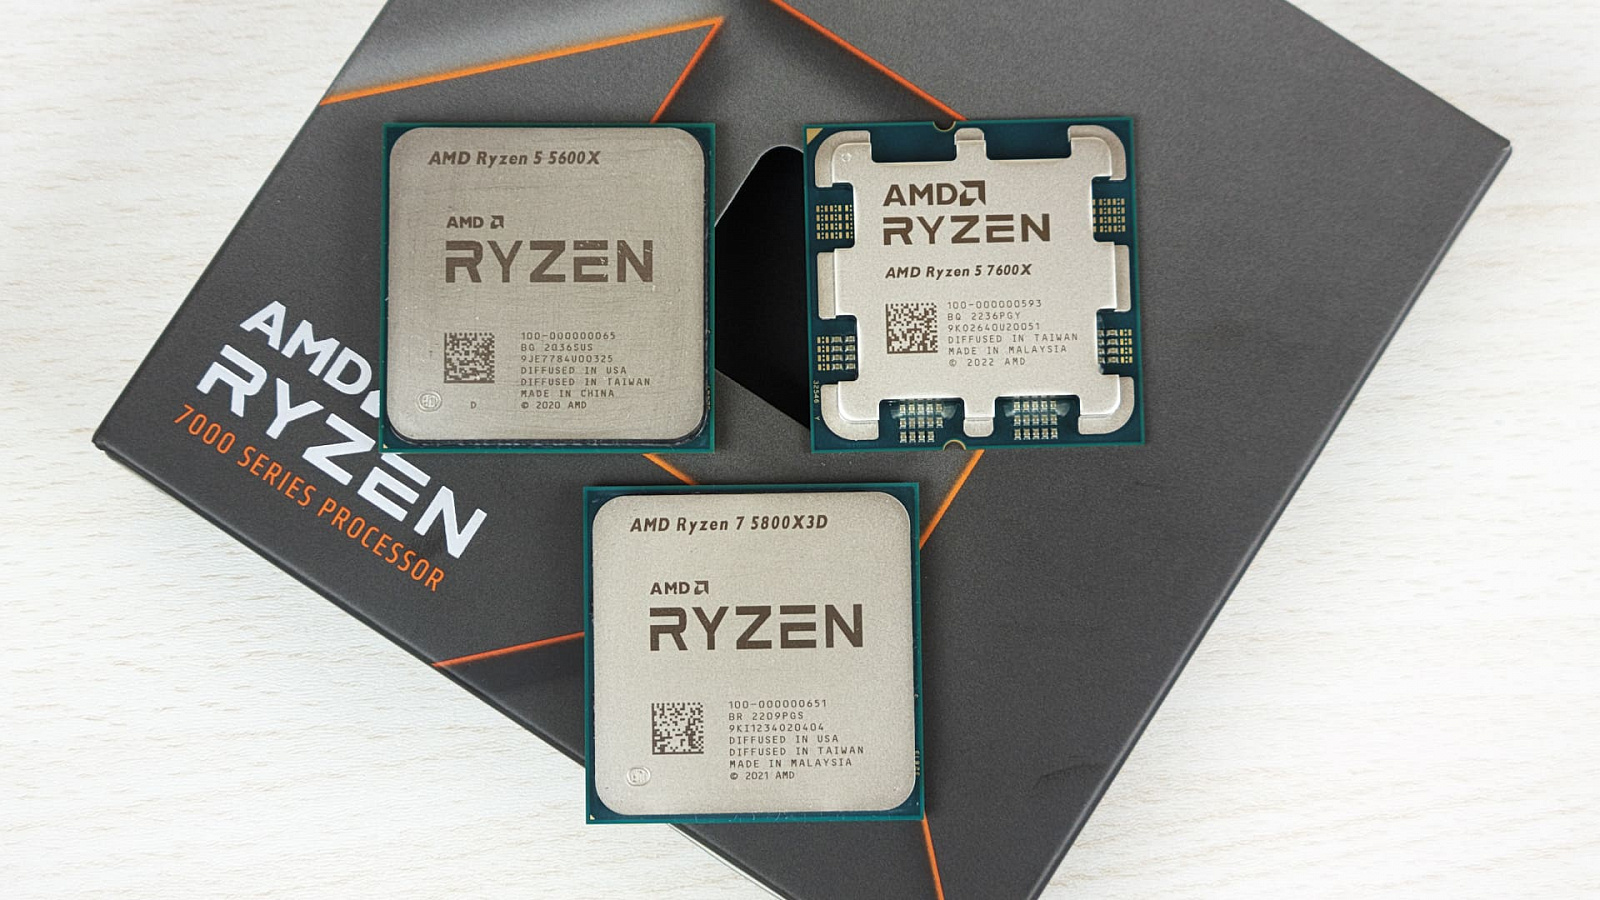 Ryzen 5 7600x am5. Ryzen 7600x. Ryzen 5 7600x. AMD Ryzen 5 7600x am5, 6 x 4700 МГЦ. AMD Ryzen 5 7600x 6-Core Processor 4.70 GHZ.